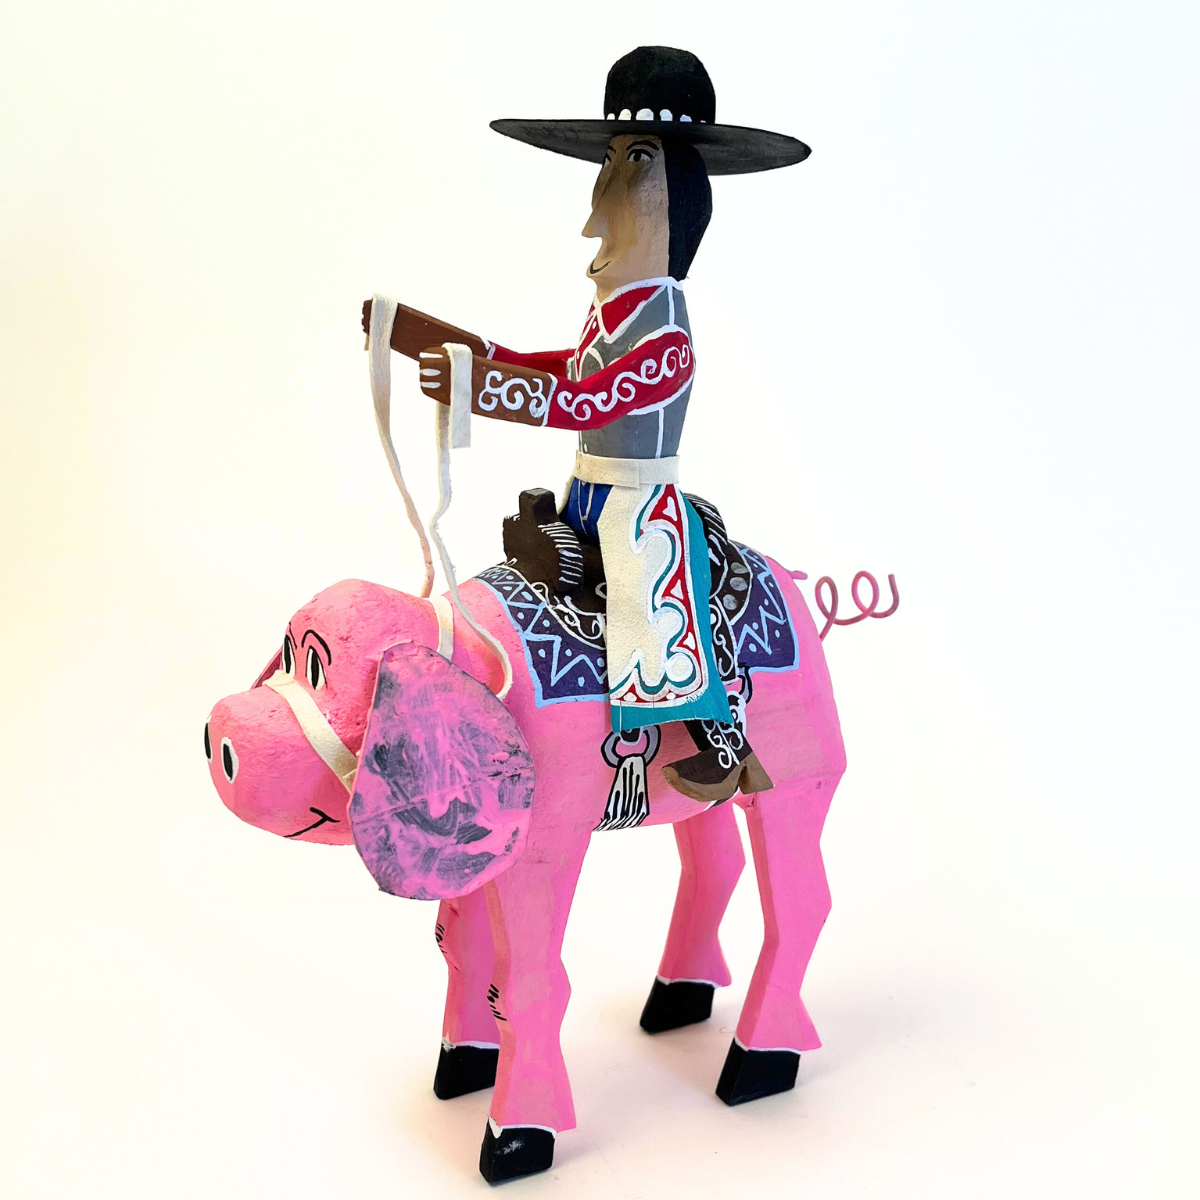 Delbert Buck Pig with Rider